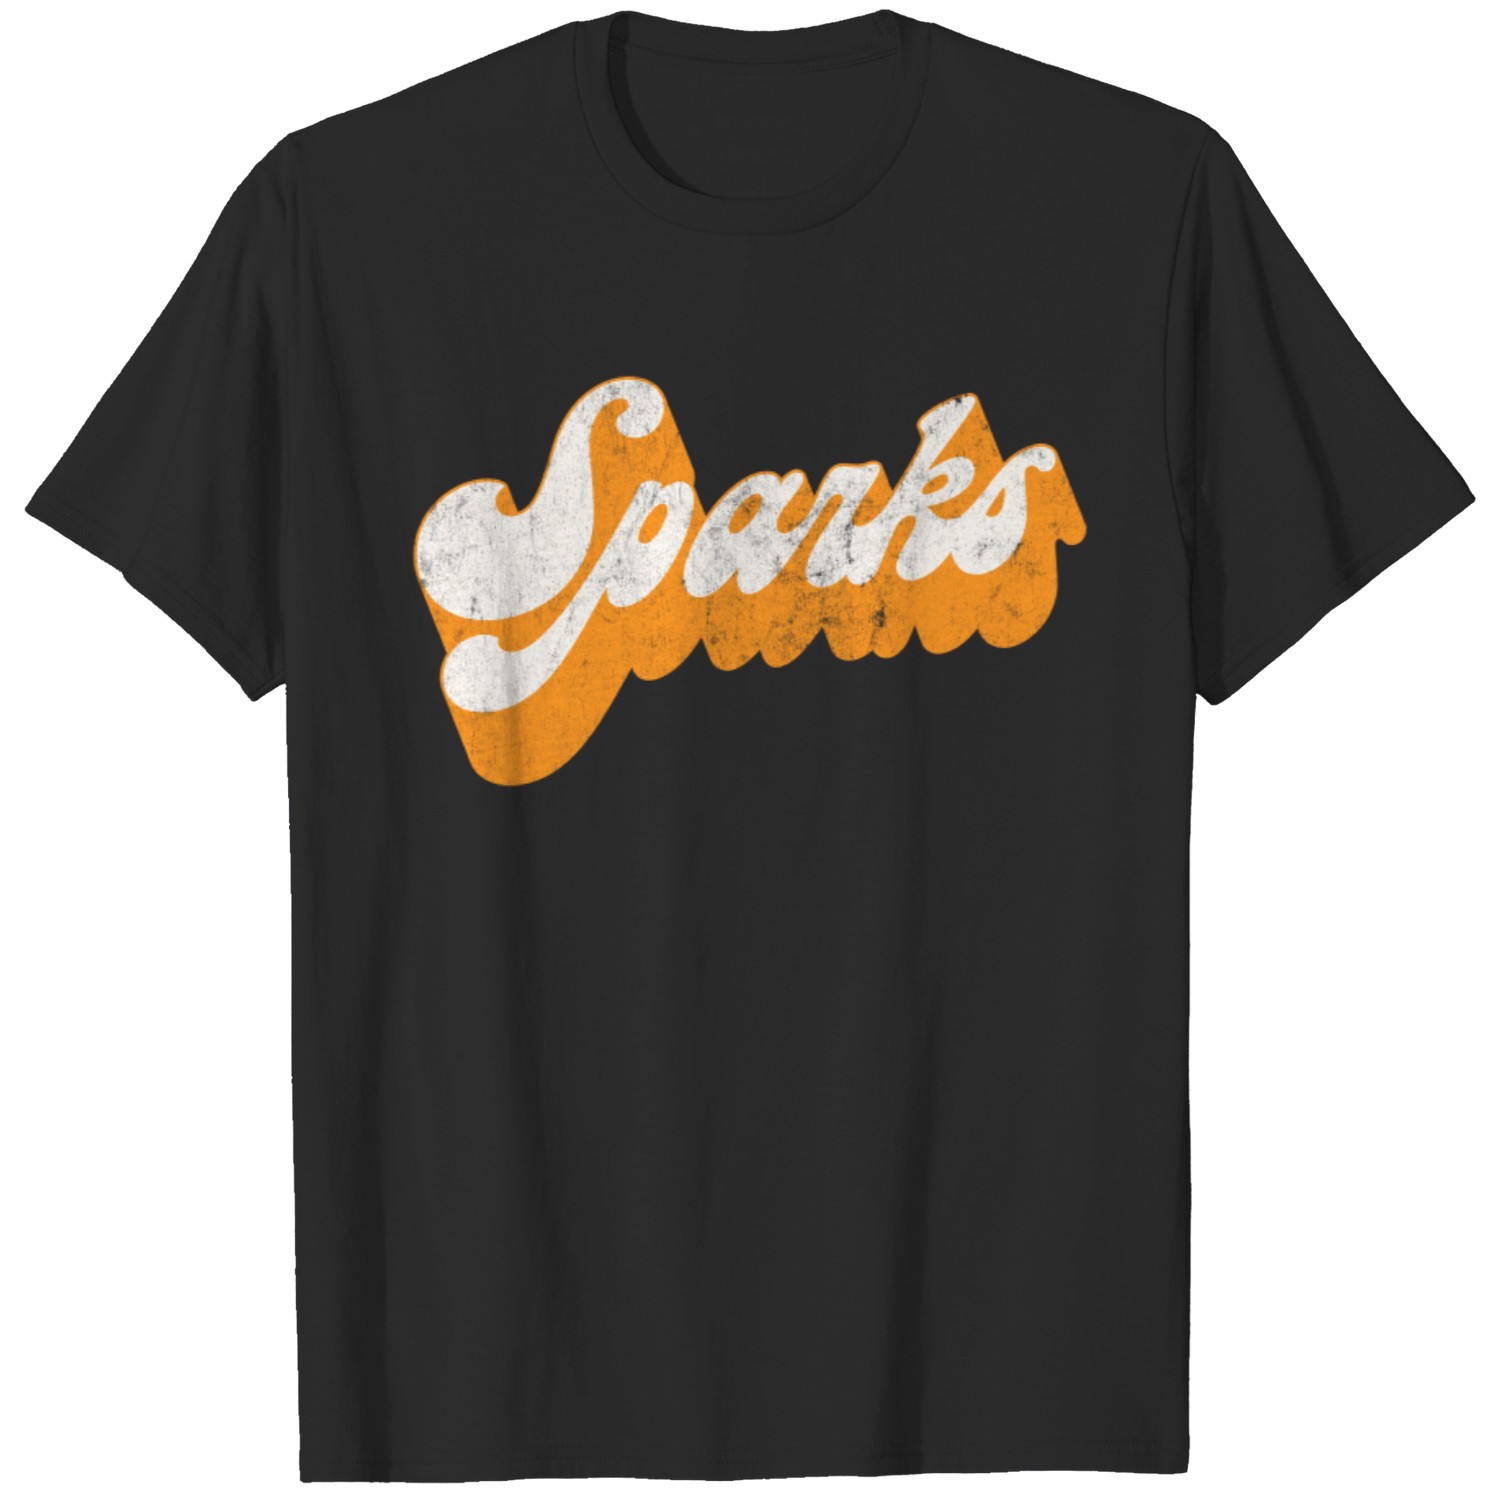 Sparks - Vintage Style Retro Aesthetic Design - Sparks - T-Shirt